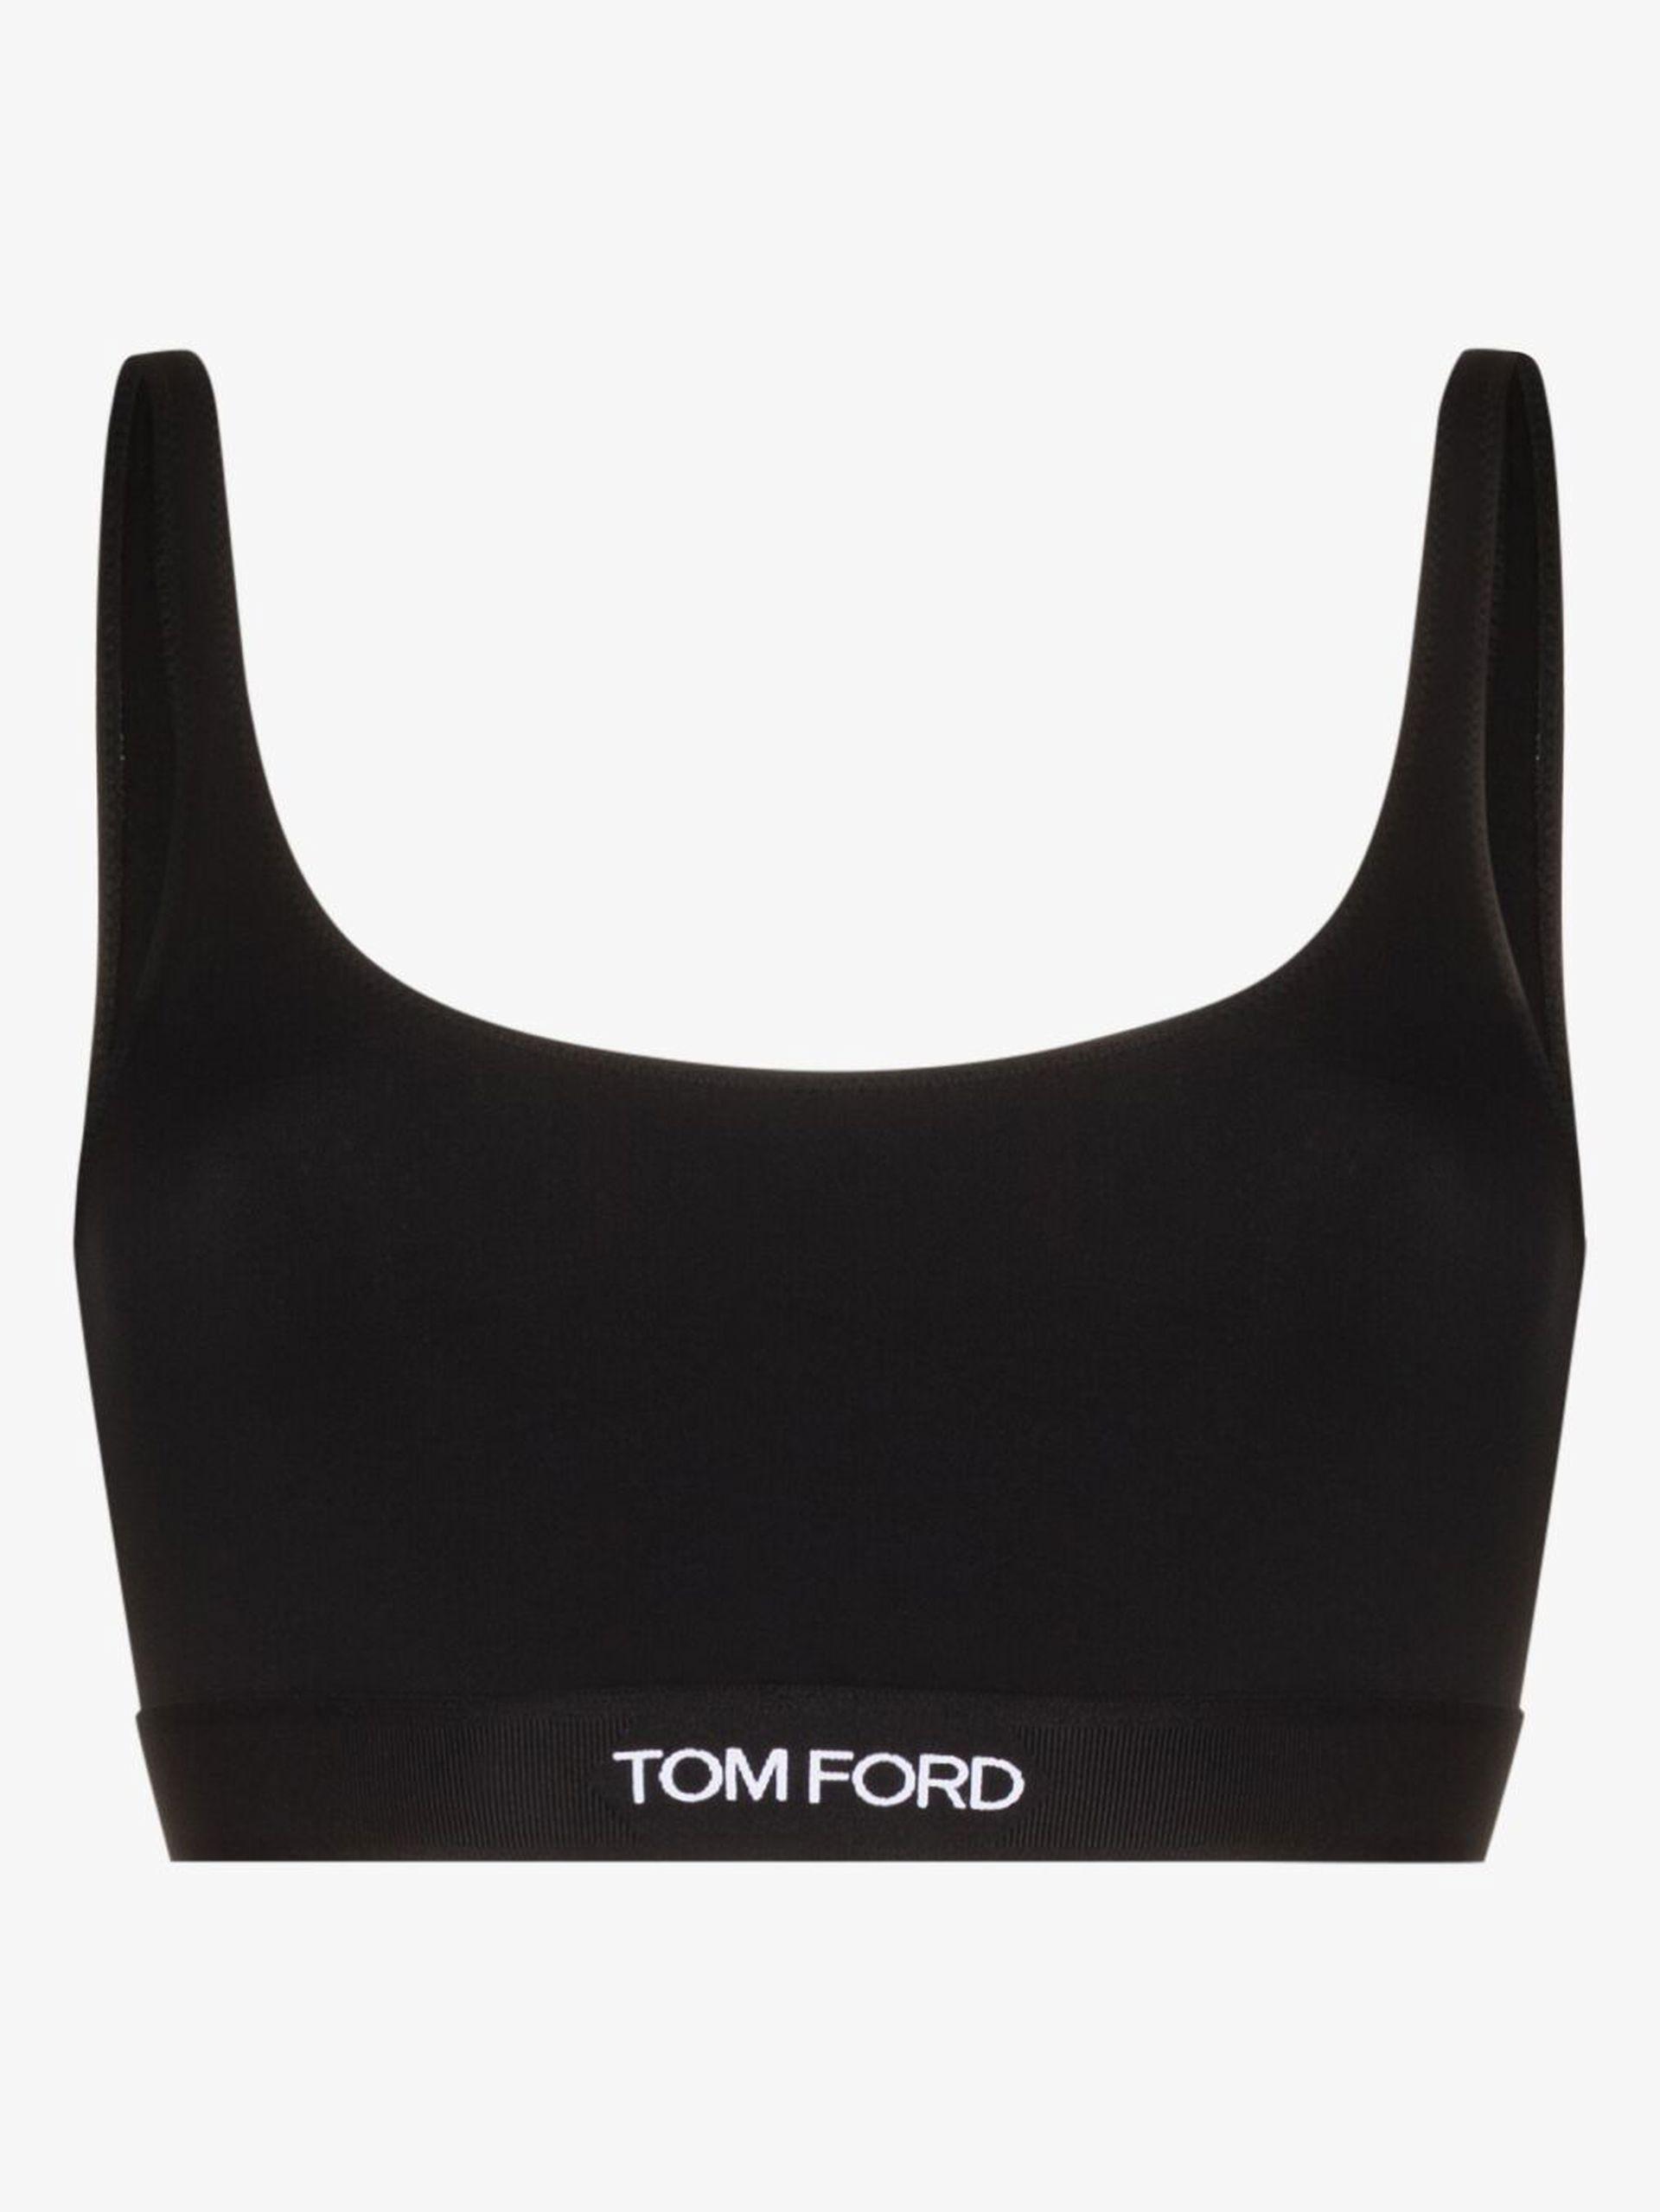 TOM FORD logo-underband bra - Brown, £155.00